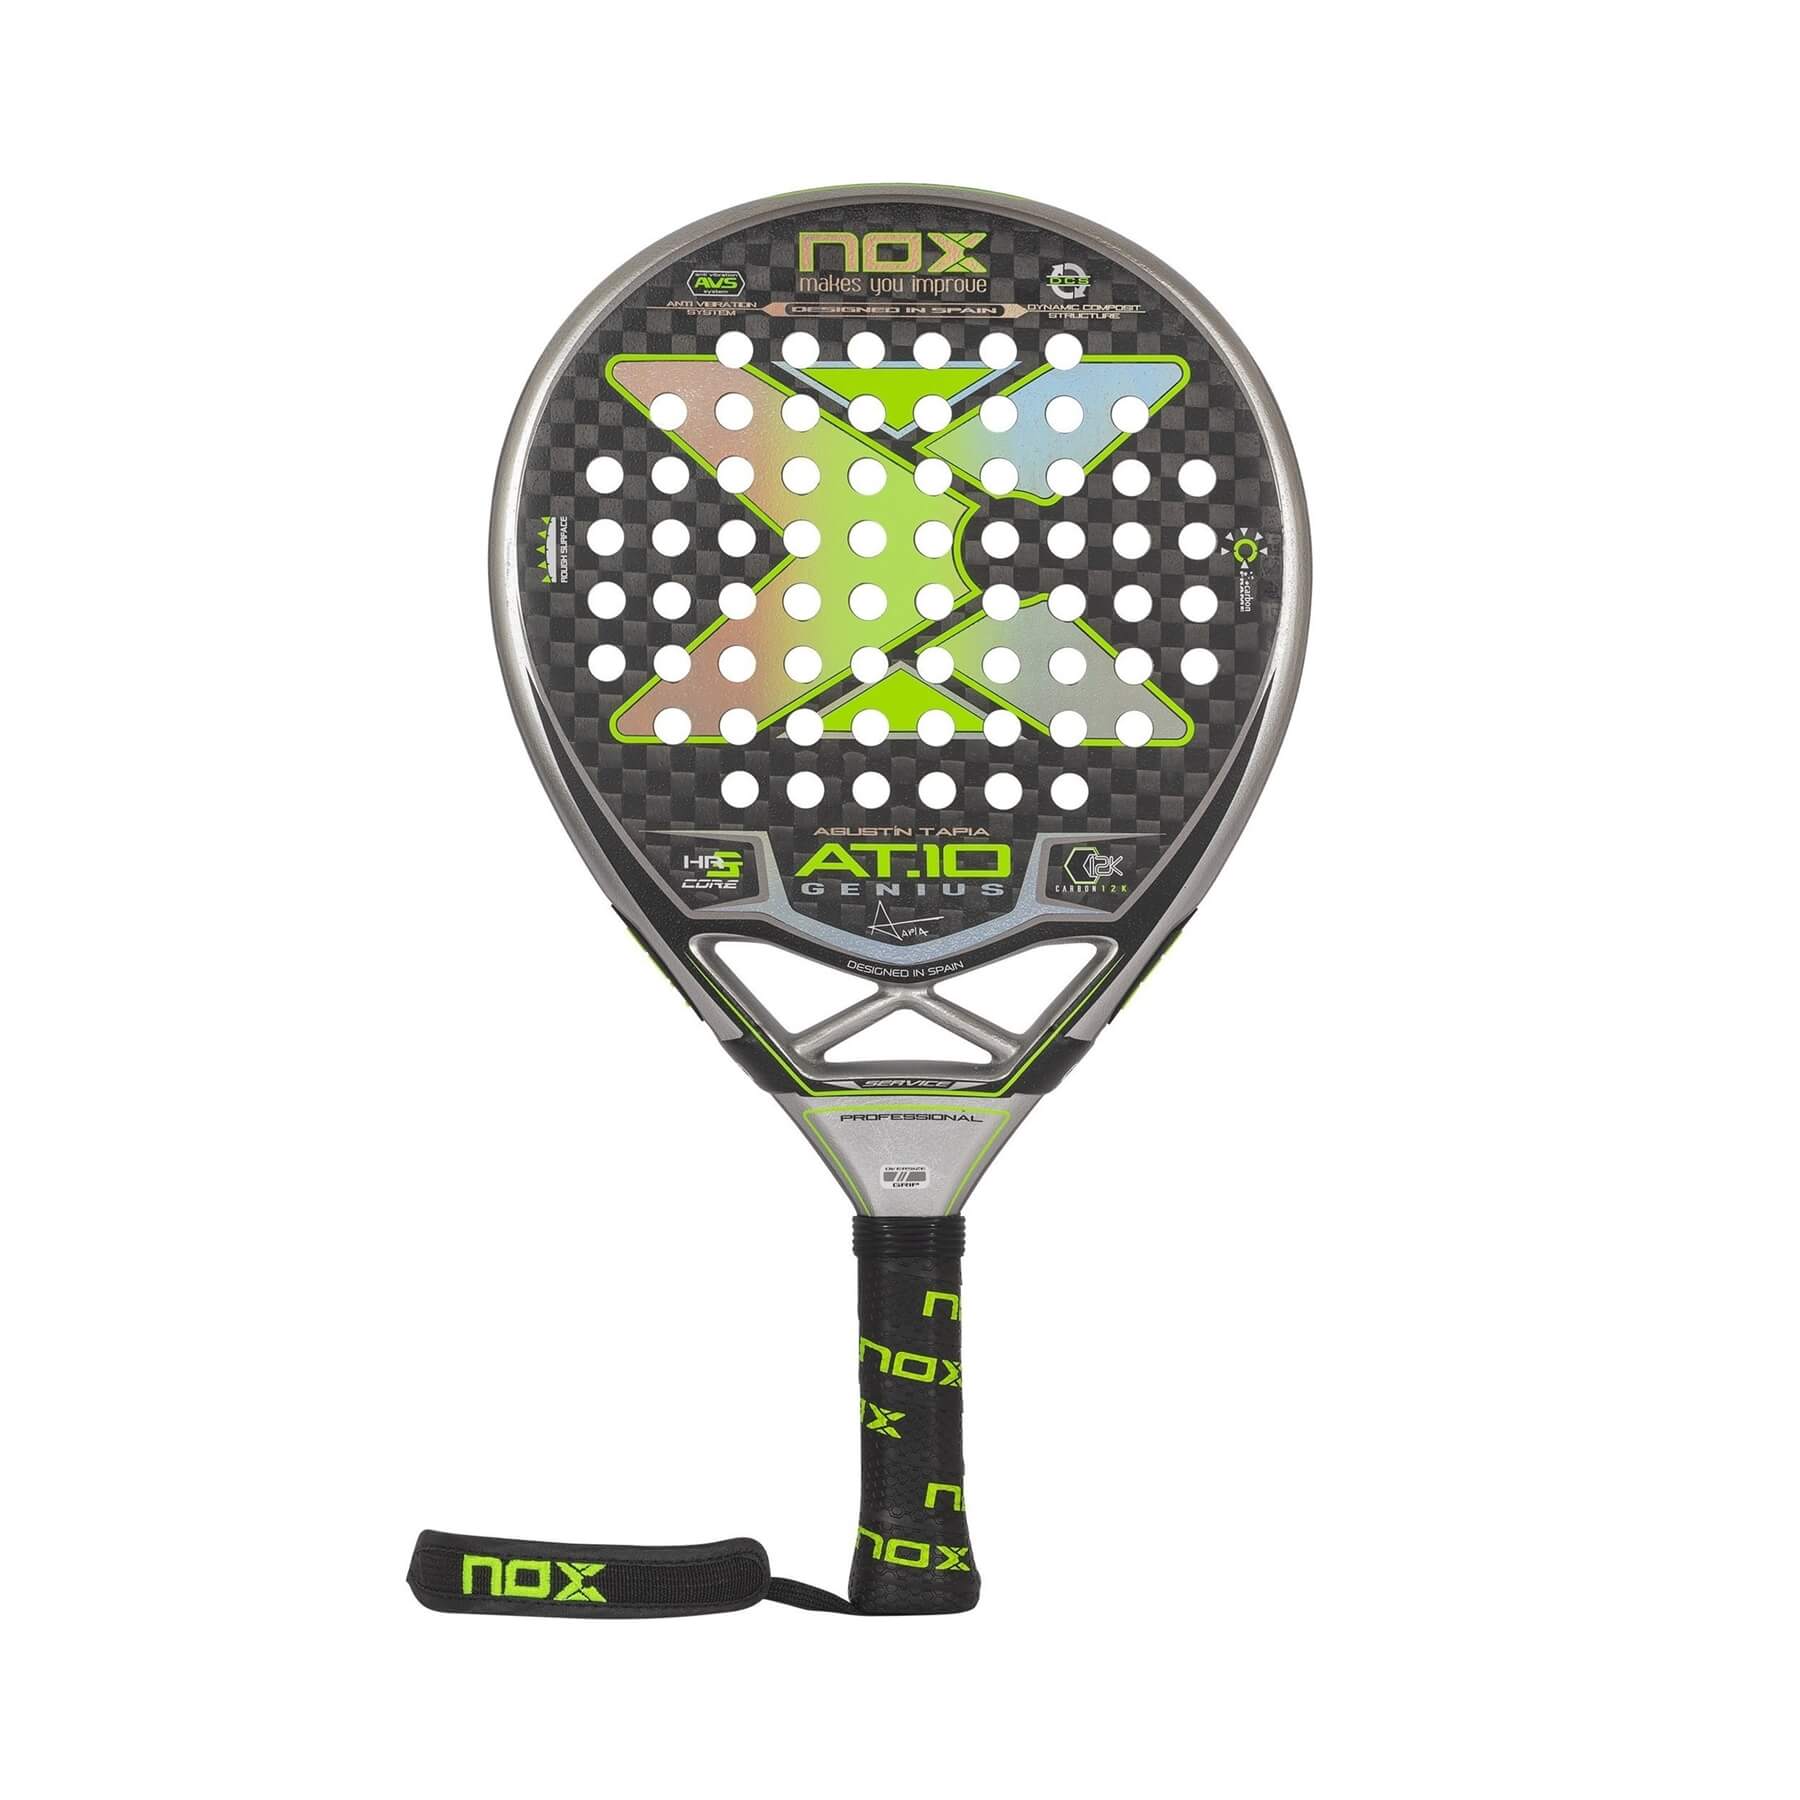 NOX padel racket product image